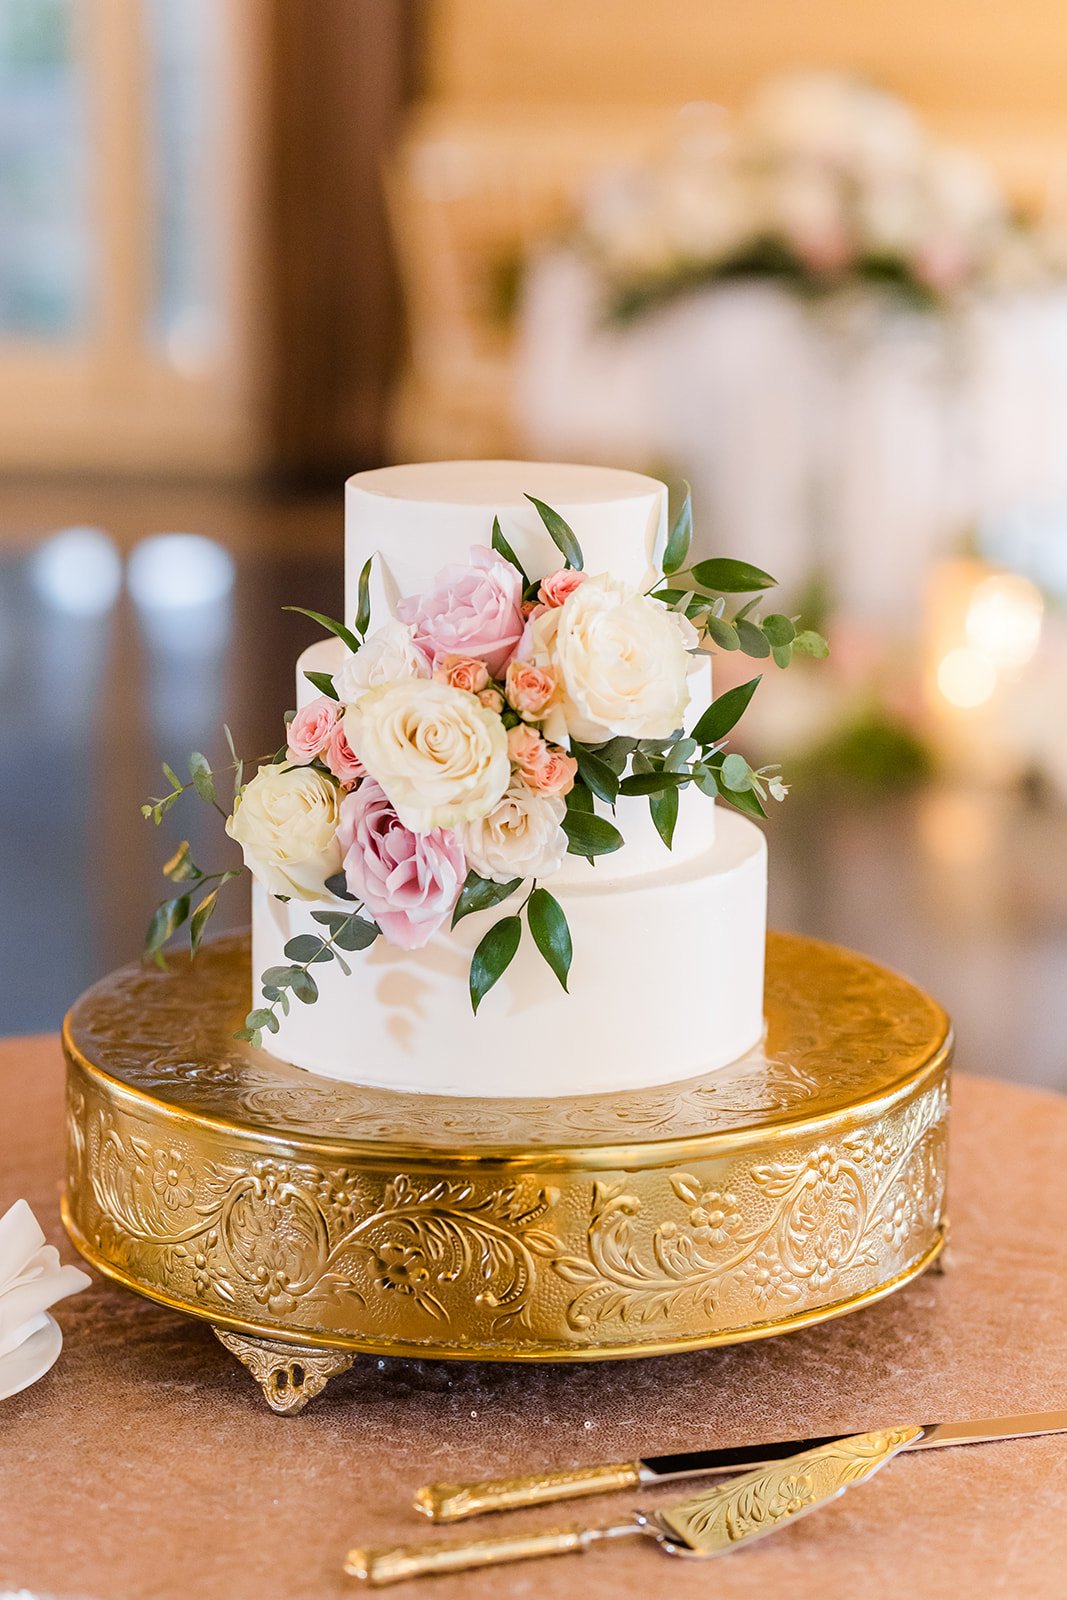 Belli-Fiori-Wedding-Cake-Flowers-3.jpg